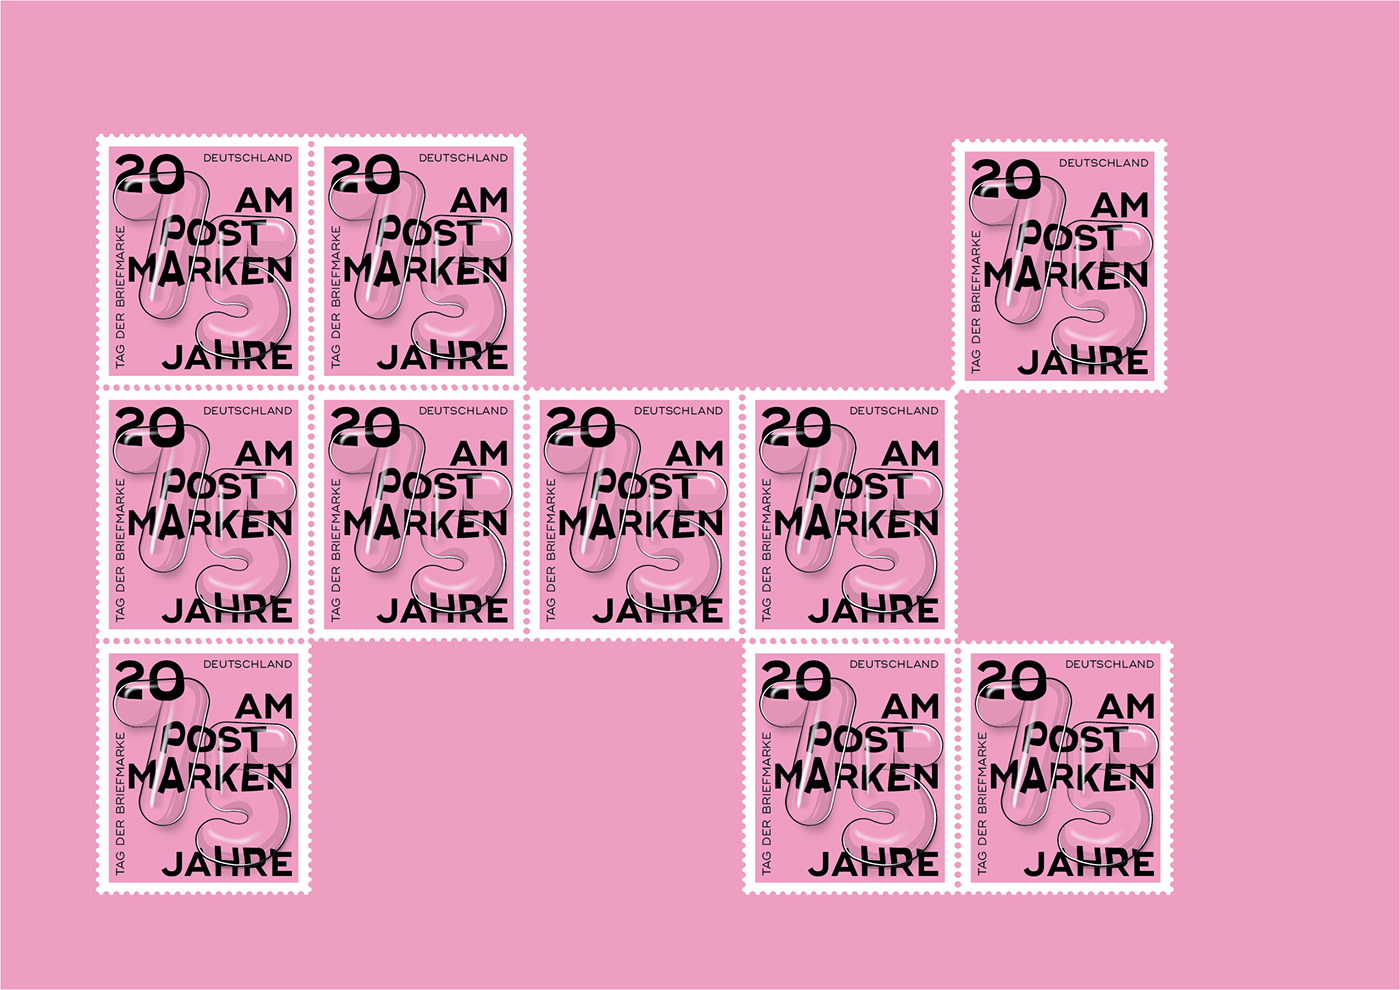 art direction  briefmarken color Duisburg graphic design  postage stamp stamps Typographie